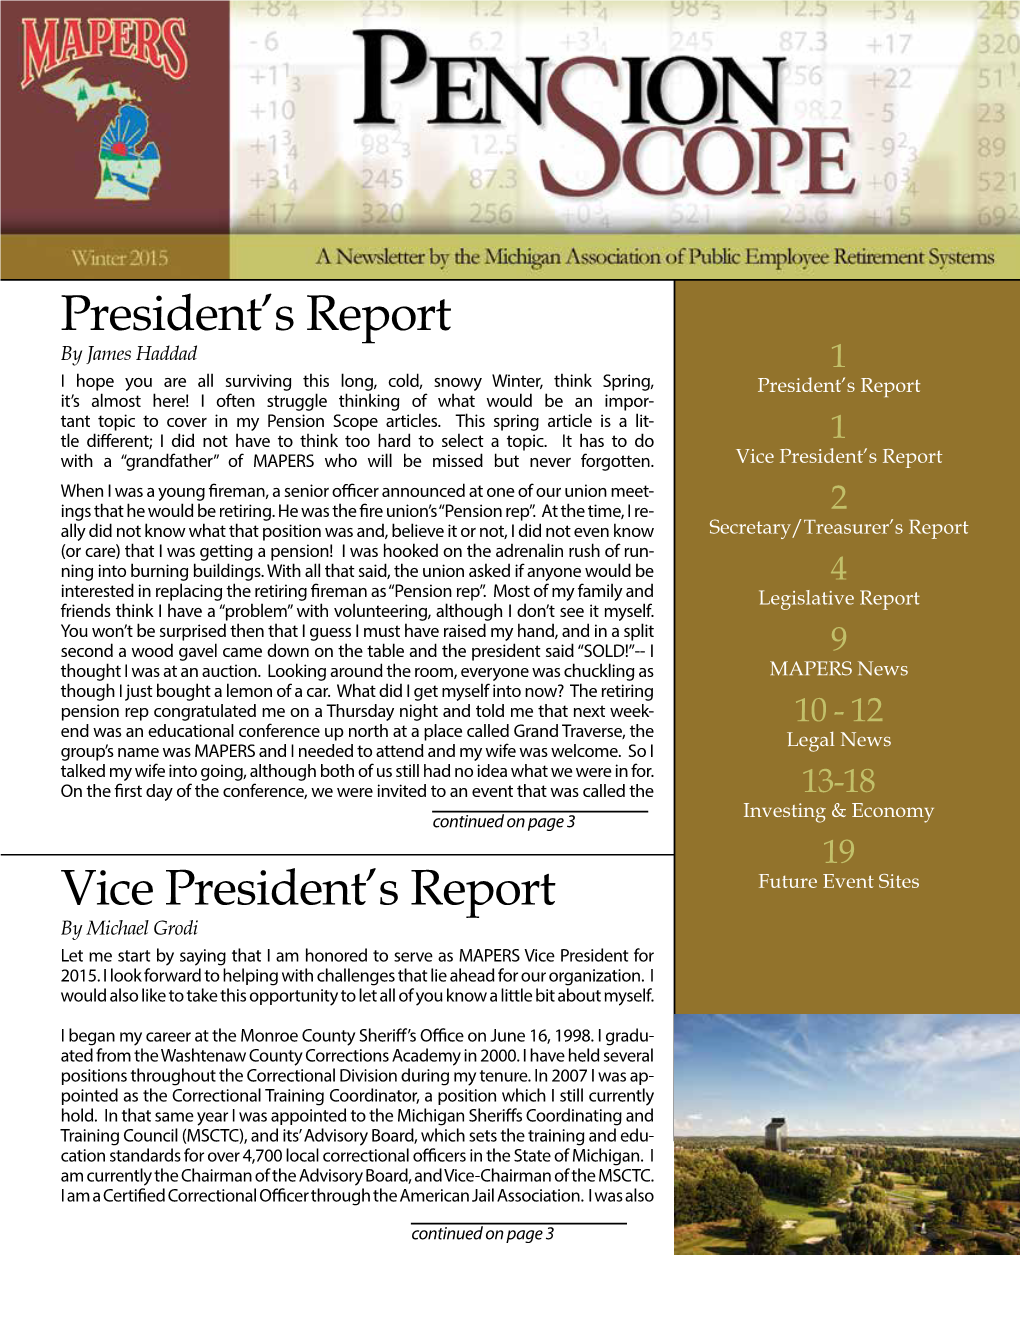 President's Report Vice President's Report